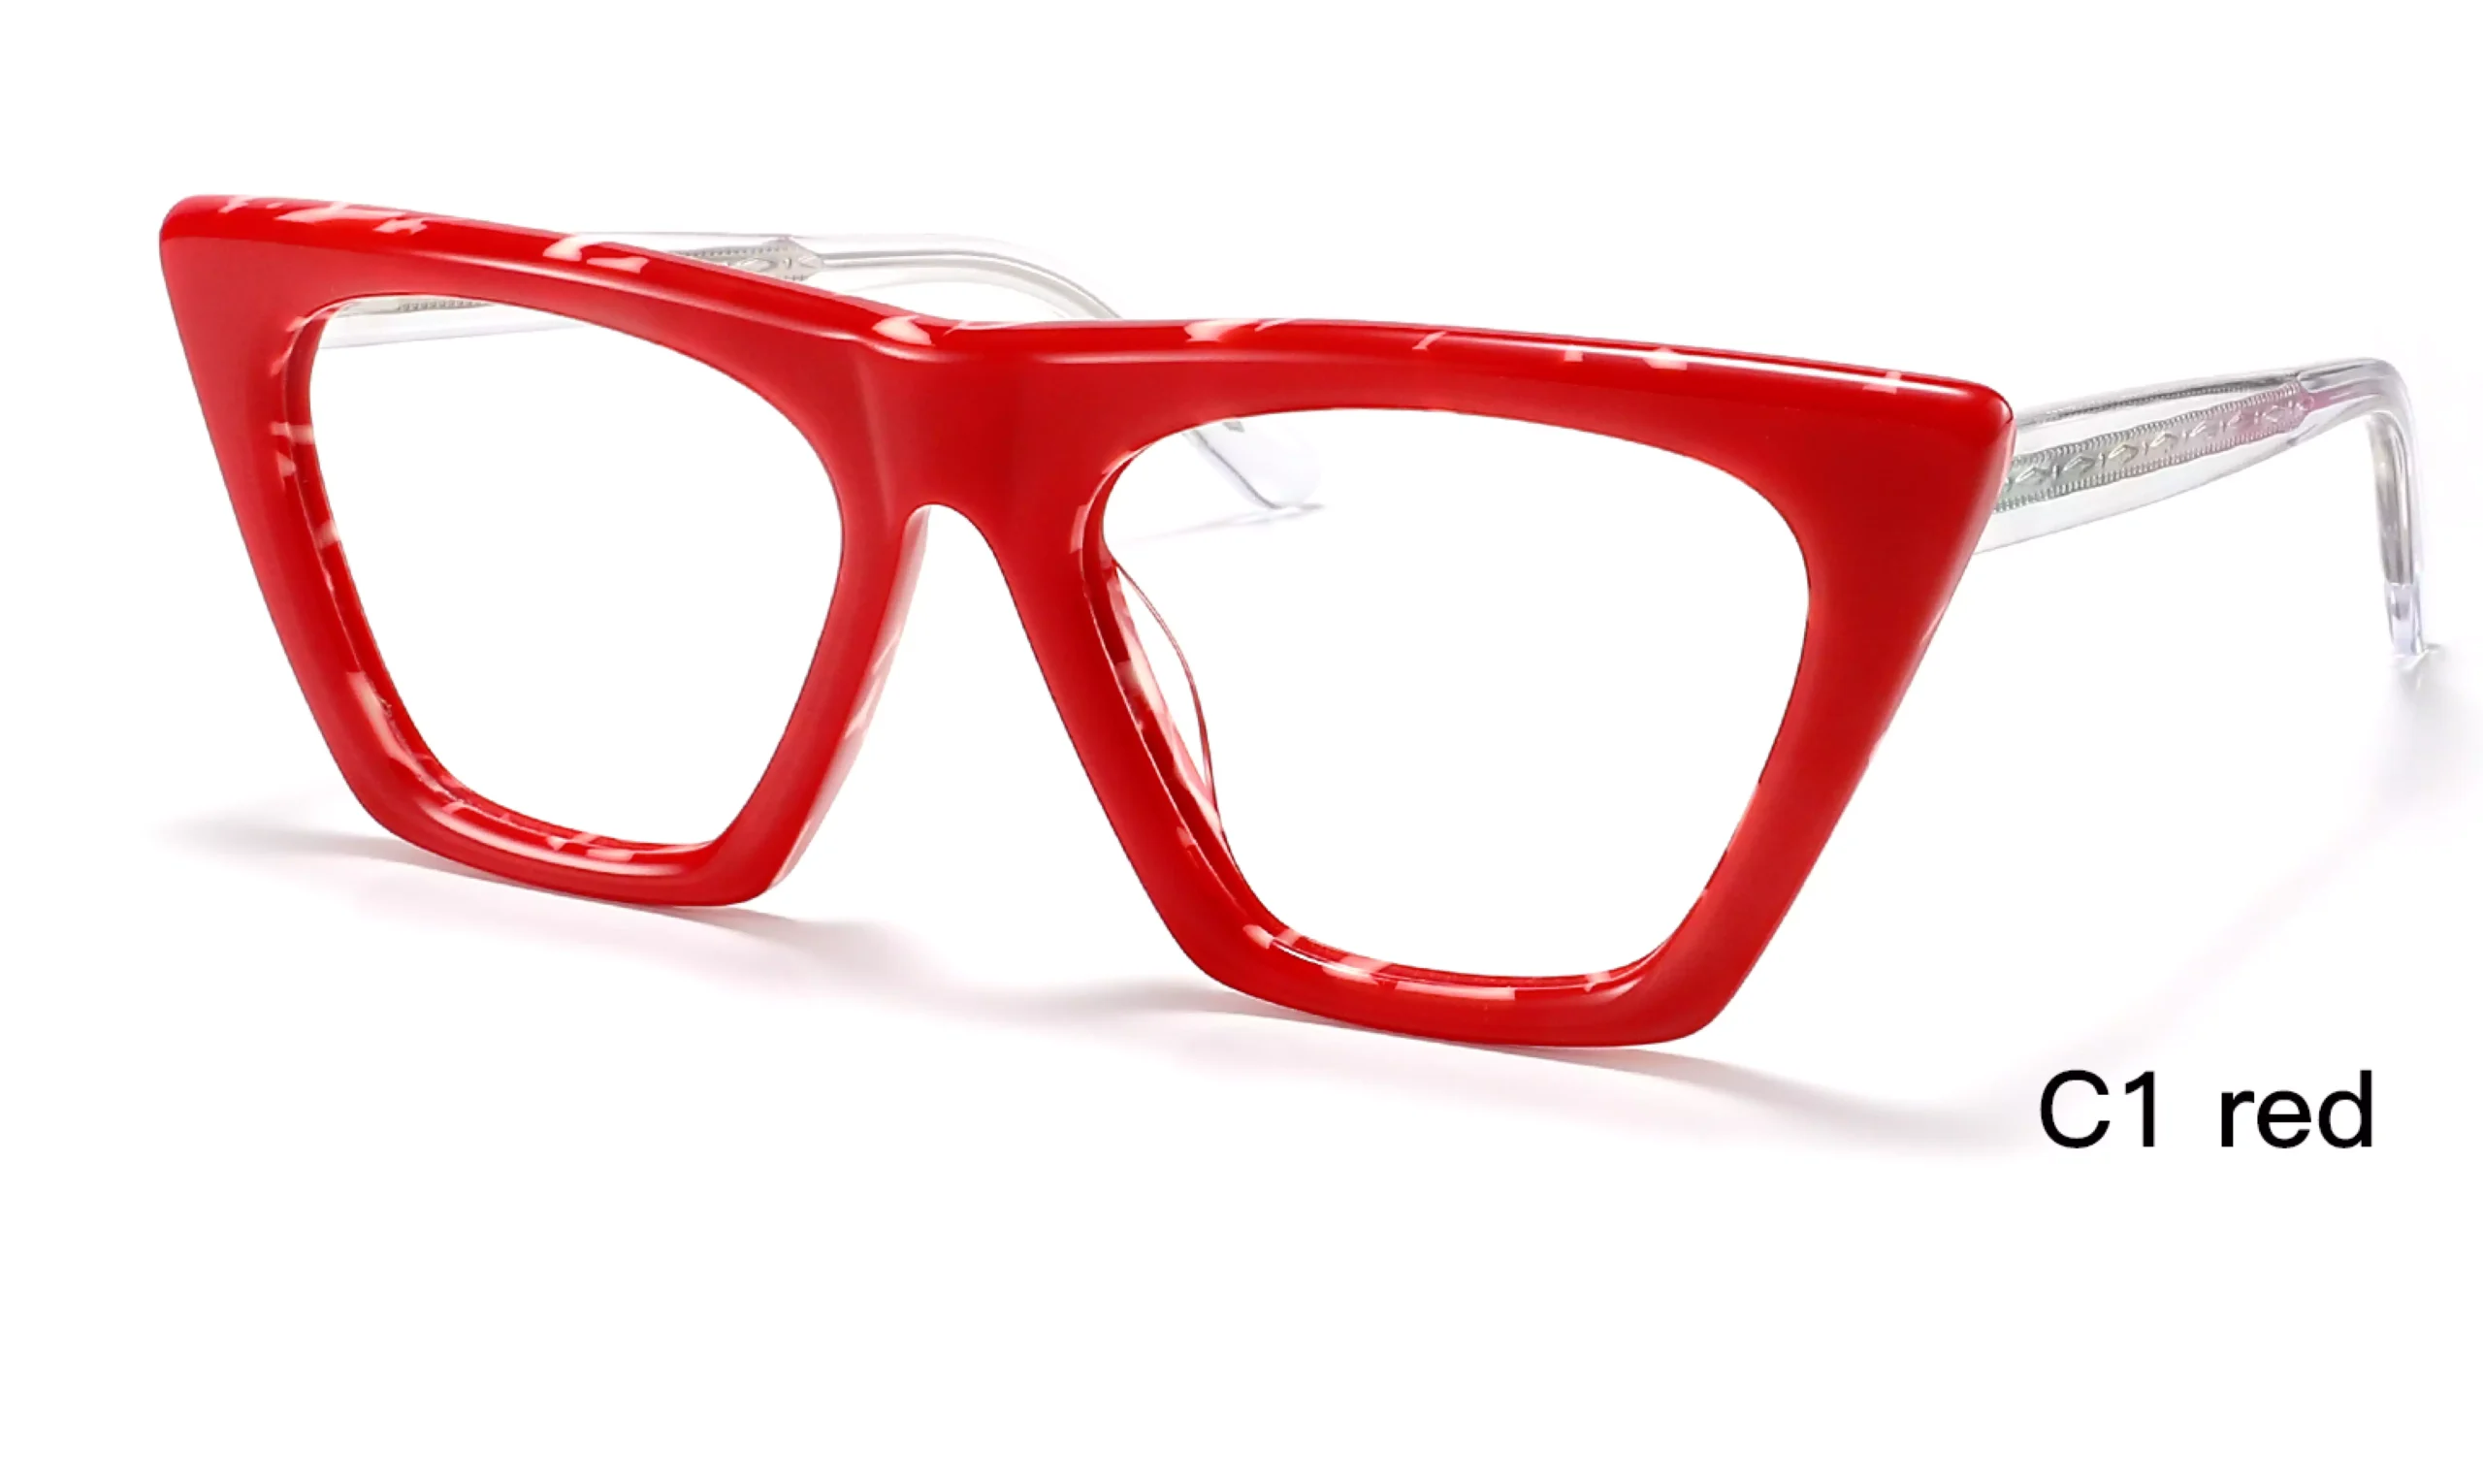 Wholesale, Fashion, Trapezoidal Eyeglass Frames, Red, 45 Degree Display